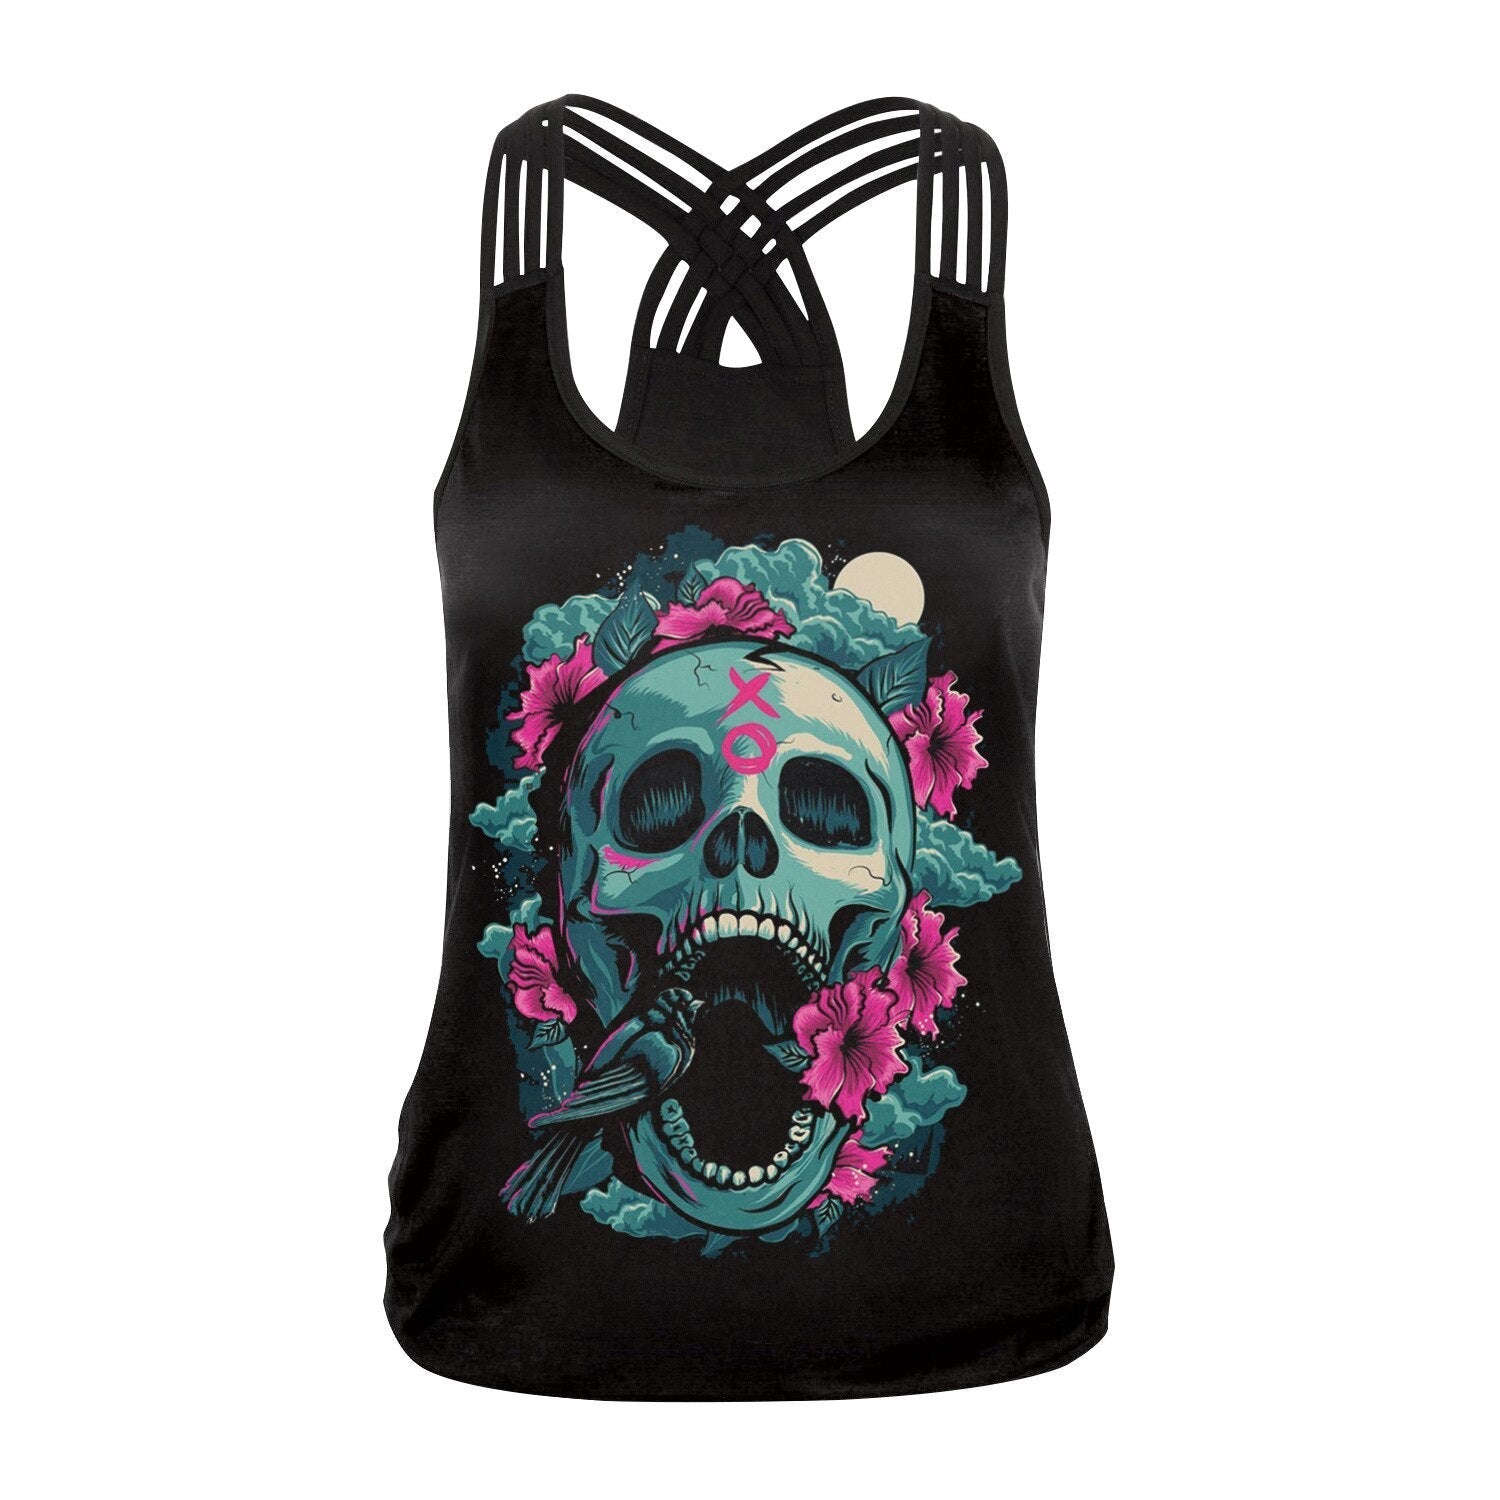 Sugar Skull Tank Top for Women / Halloween Fashion / Gothic Style Back Cross Sleeveless Vest #4 - HARD'N'HEAVY